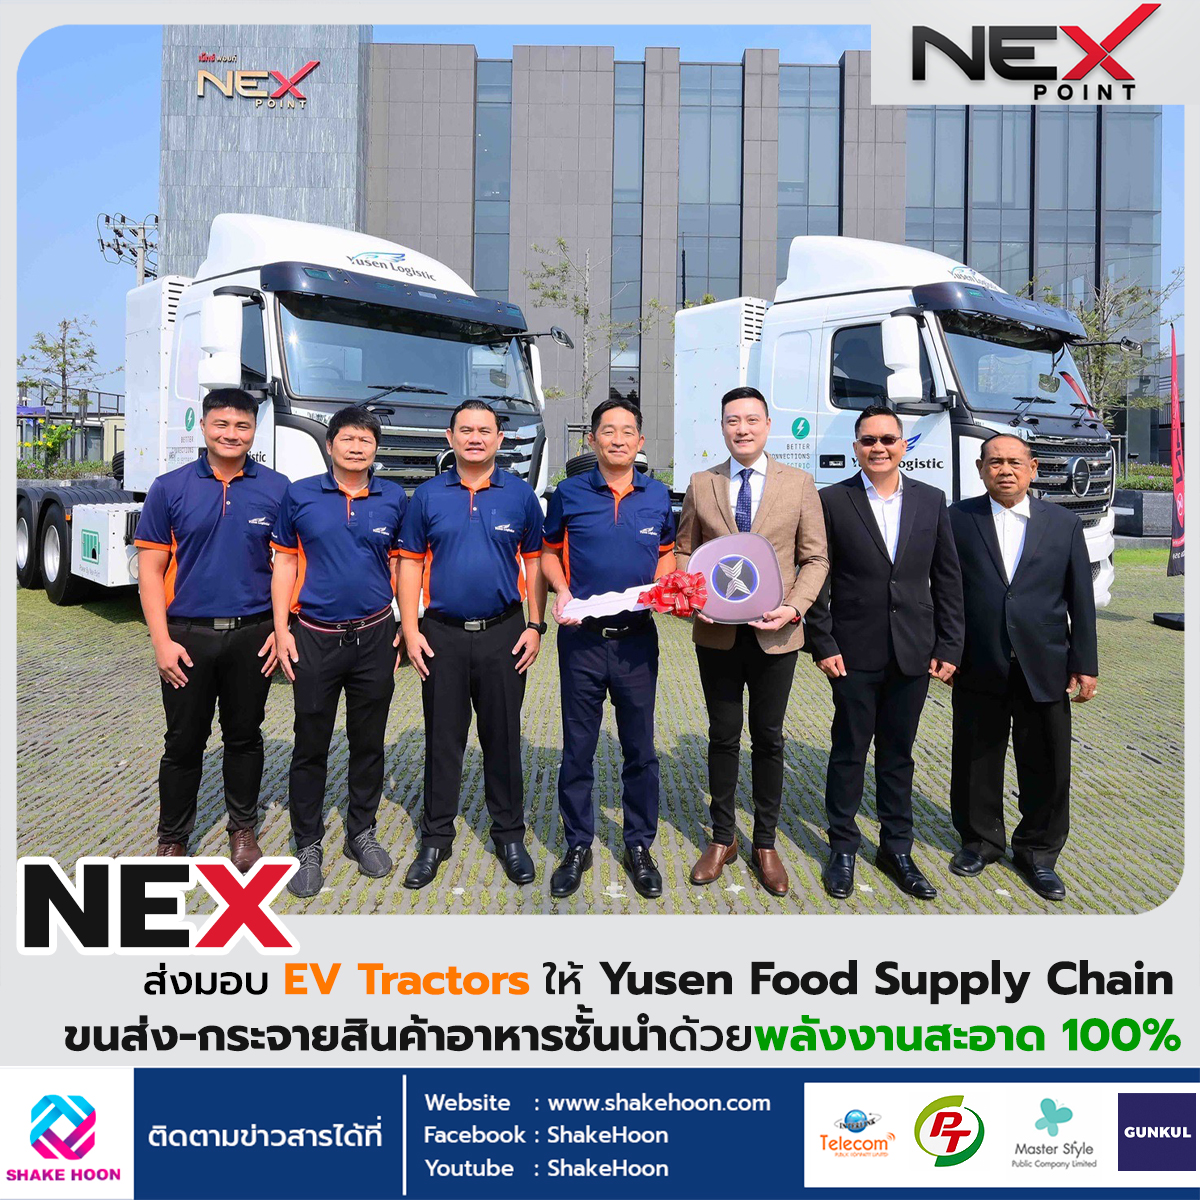 NEX ส่งมอบ EV Tractors ให้ Yusen Food Supply Chain ขนส่ง-กระจายสินค้าอาหารชั้นนำด้วยพลังงานสะอาด 100